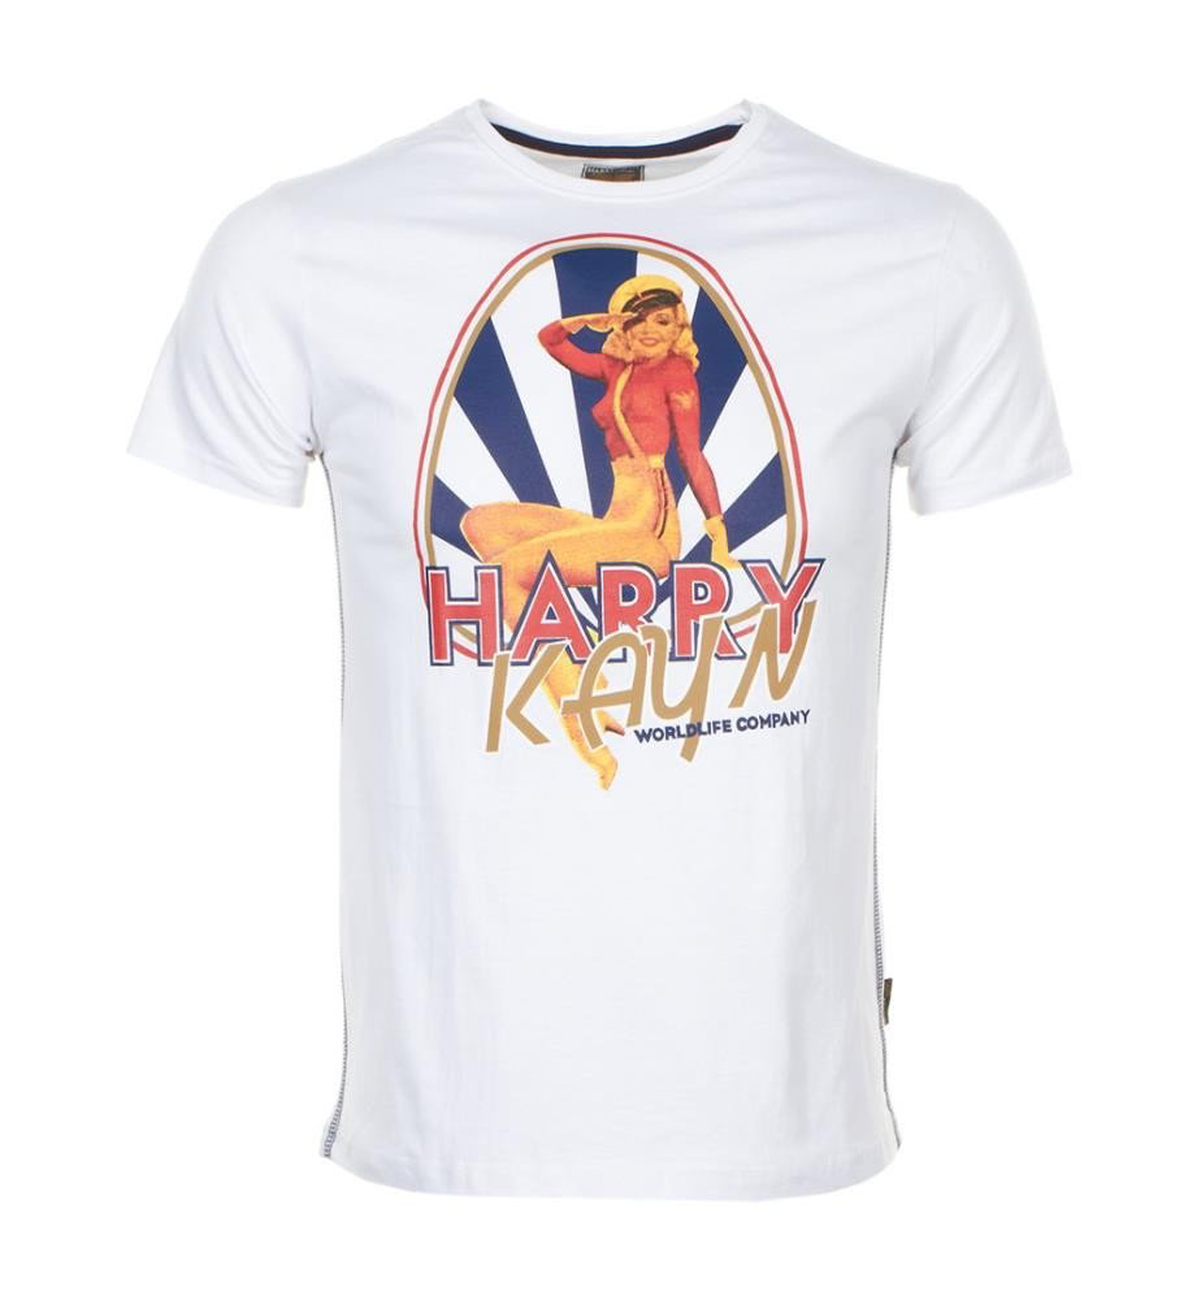 Mode- Lifestyle Garçon Harry Kayn T-shirt Manches Courtes Garçon Ecelinup